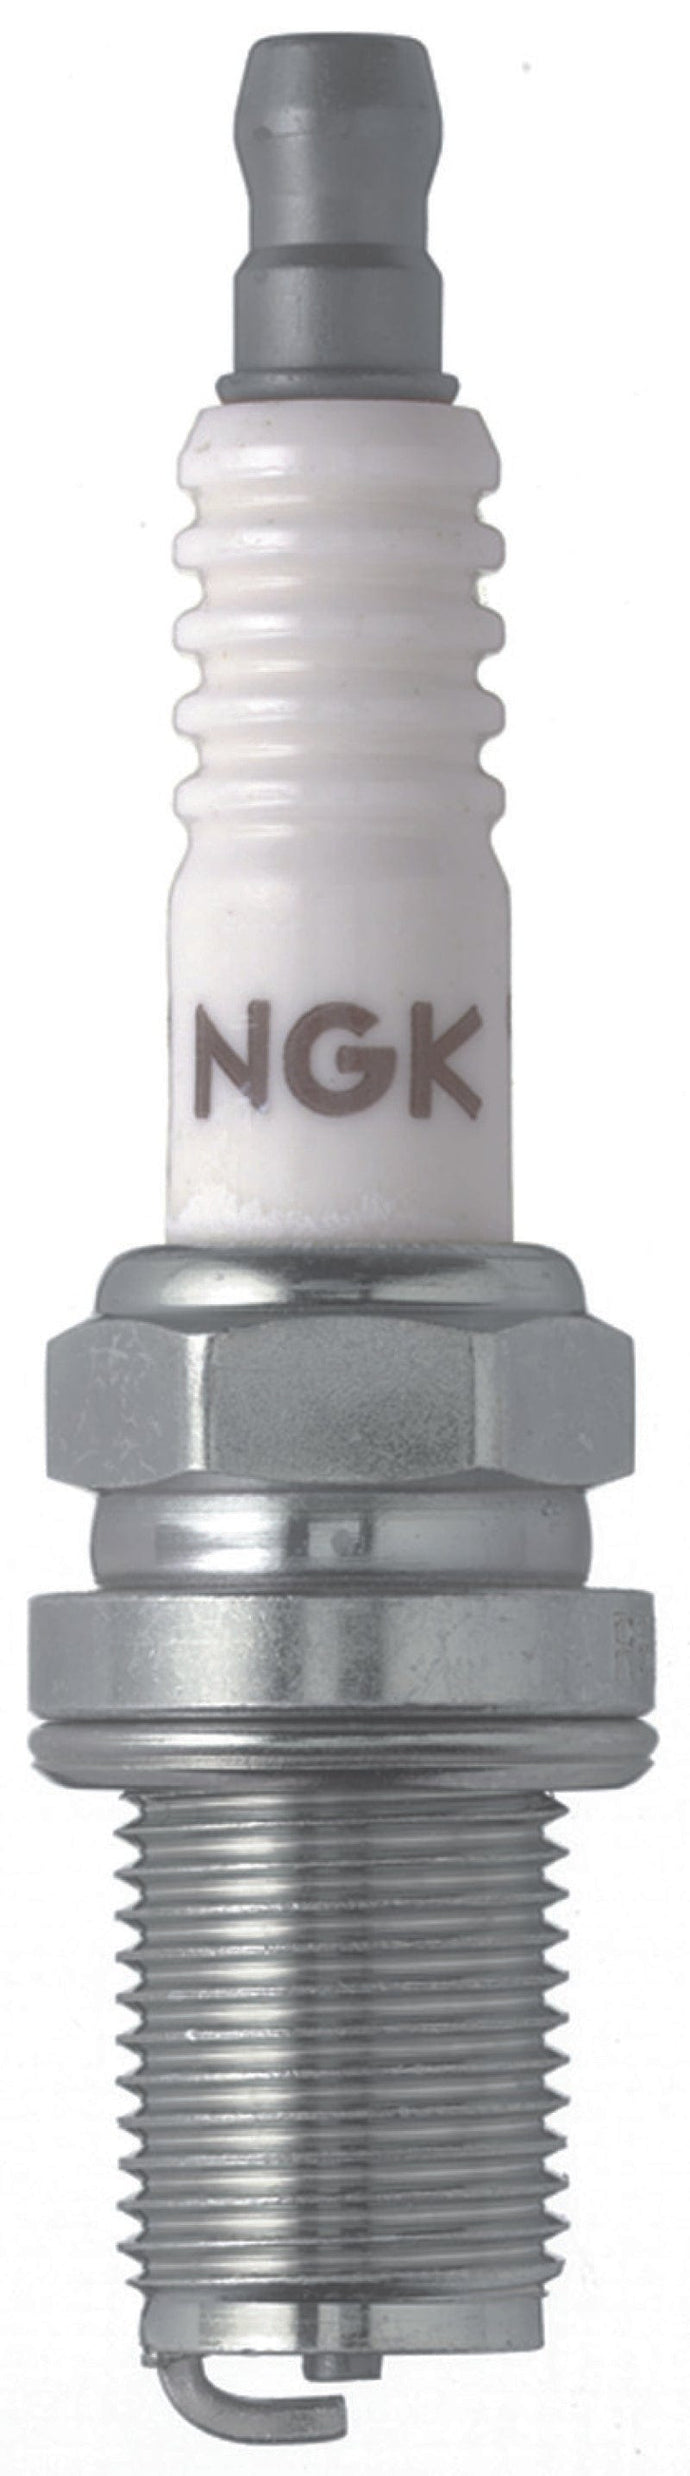 NGK NGK4091